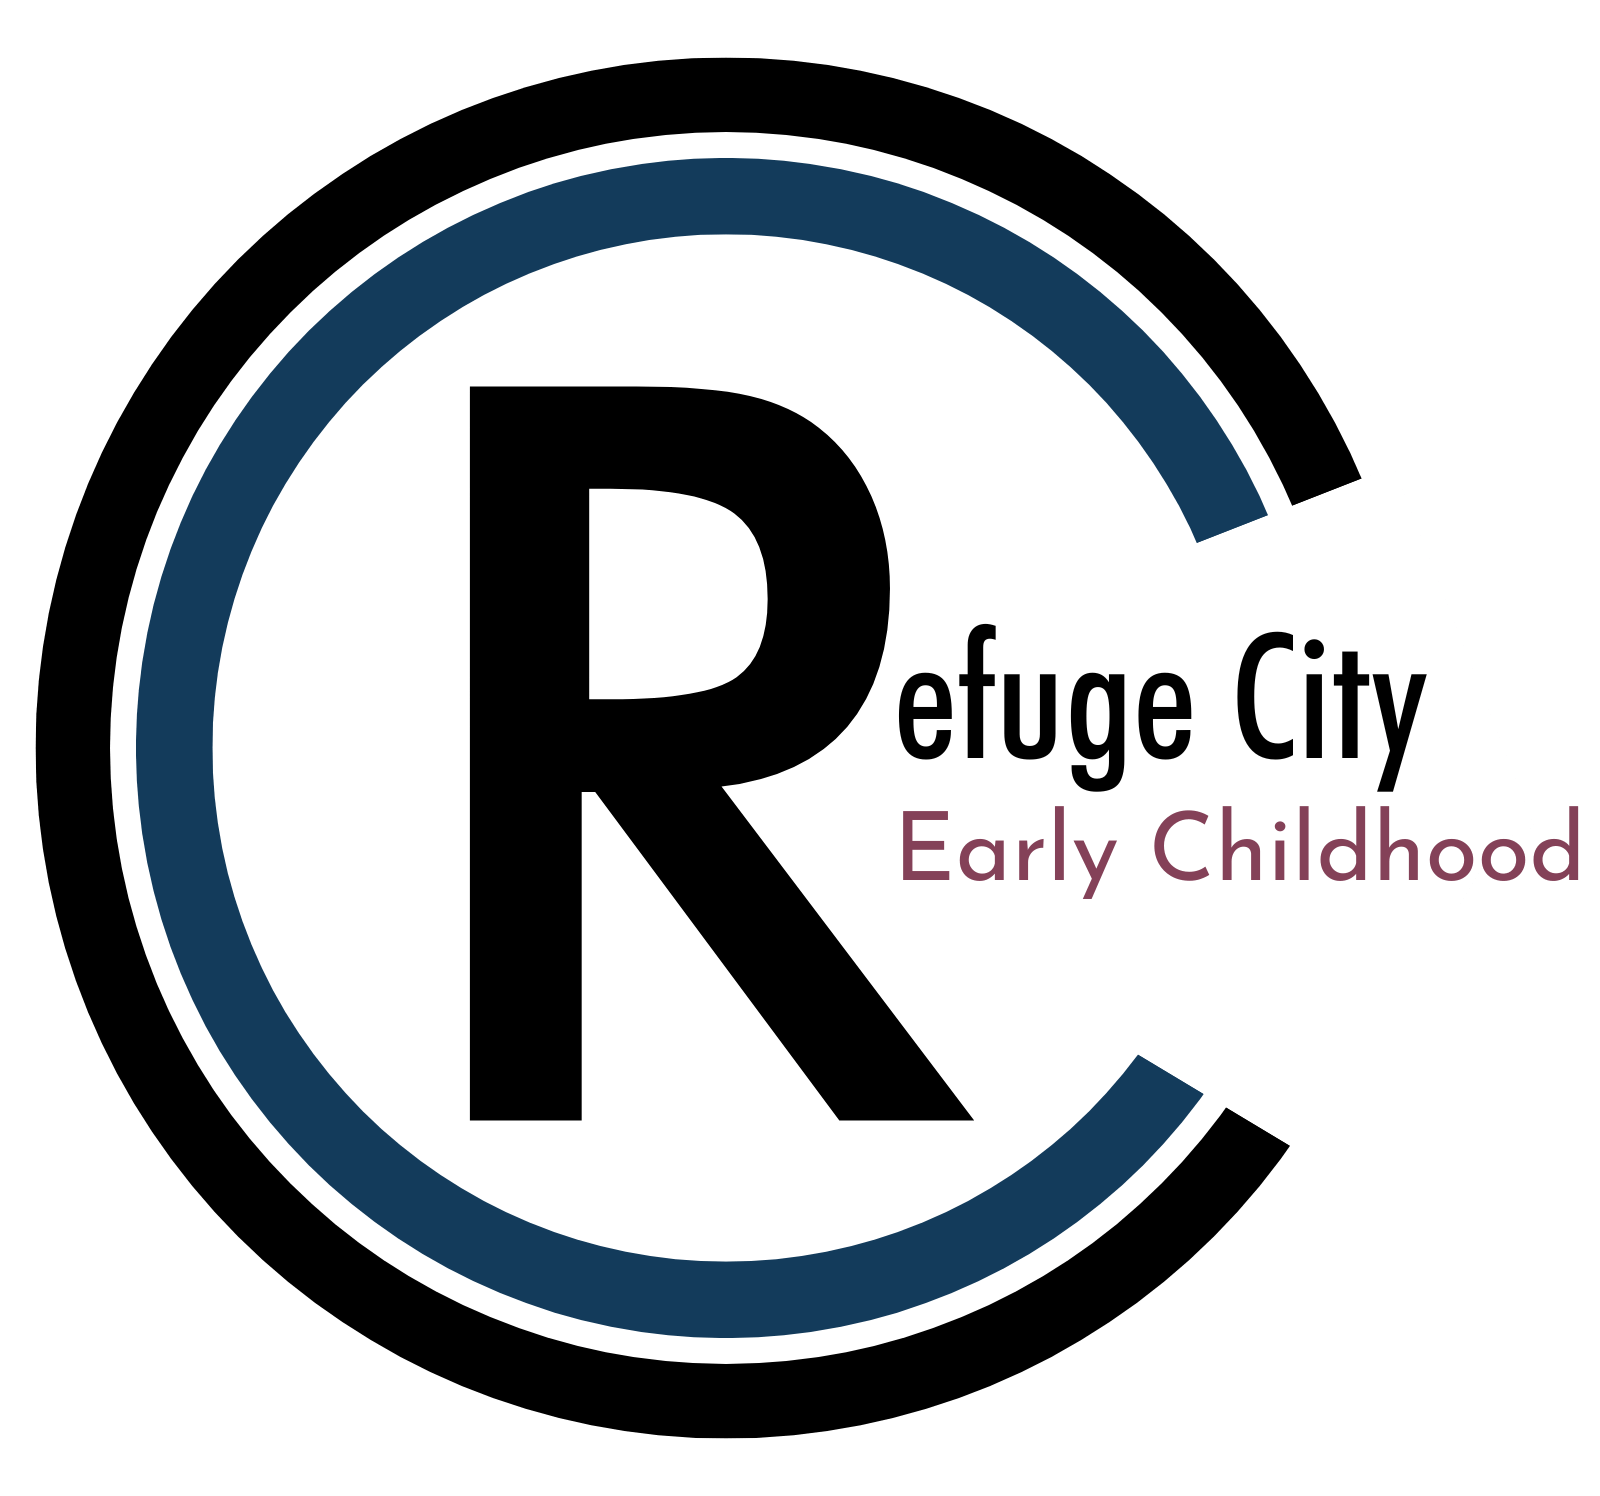 refuge city early childhood logo